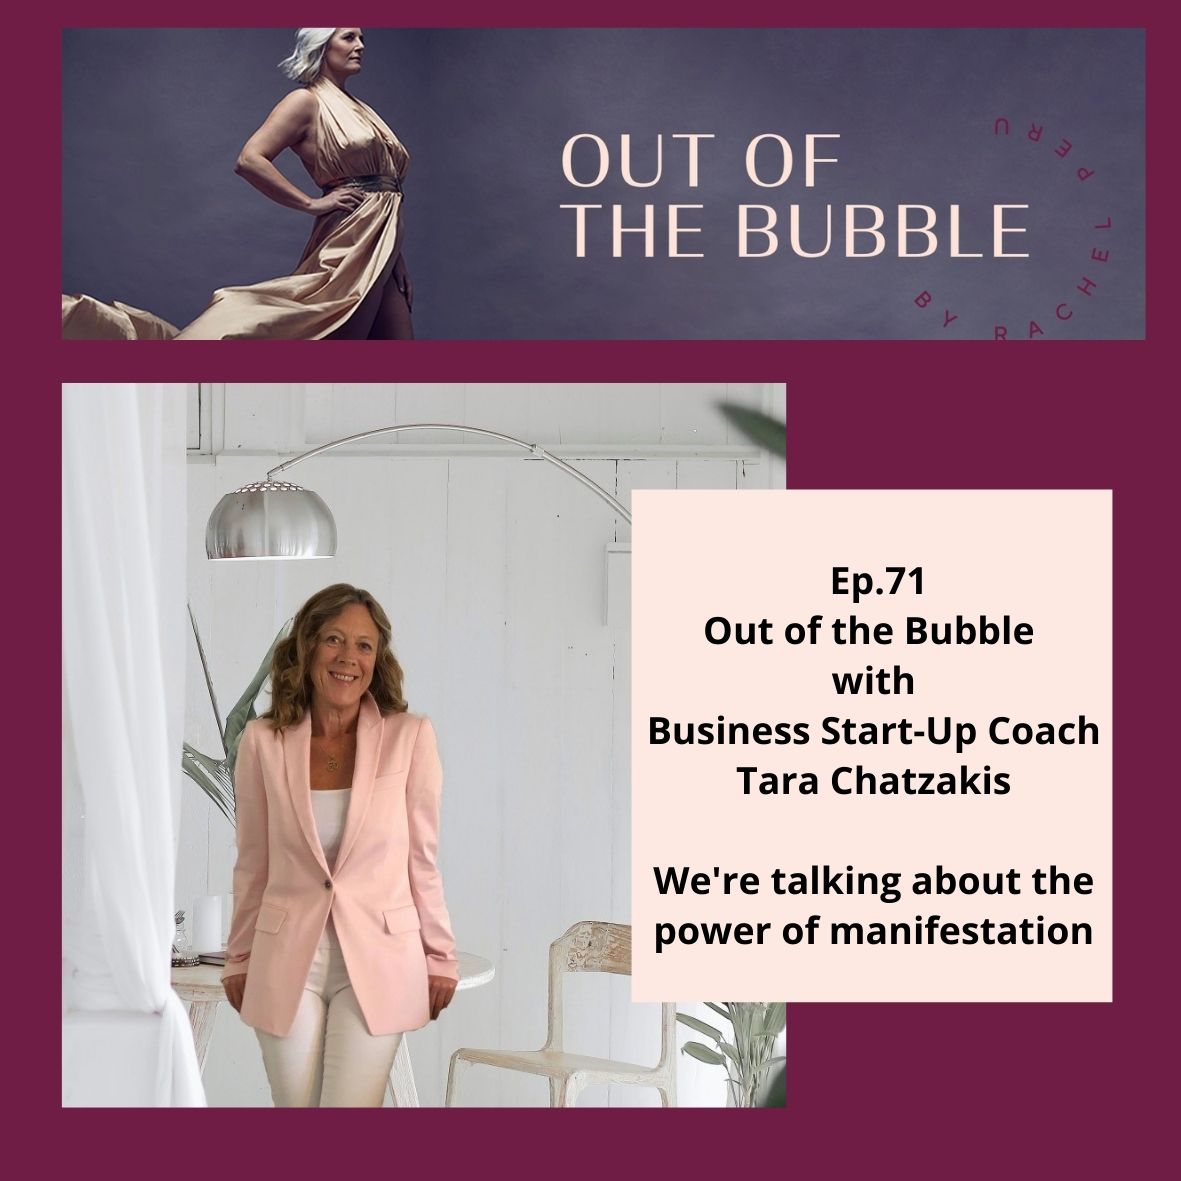 Ep.71 Liberte Free to Be with business start-up coach Tara Chatzakis